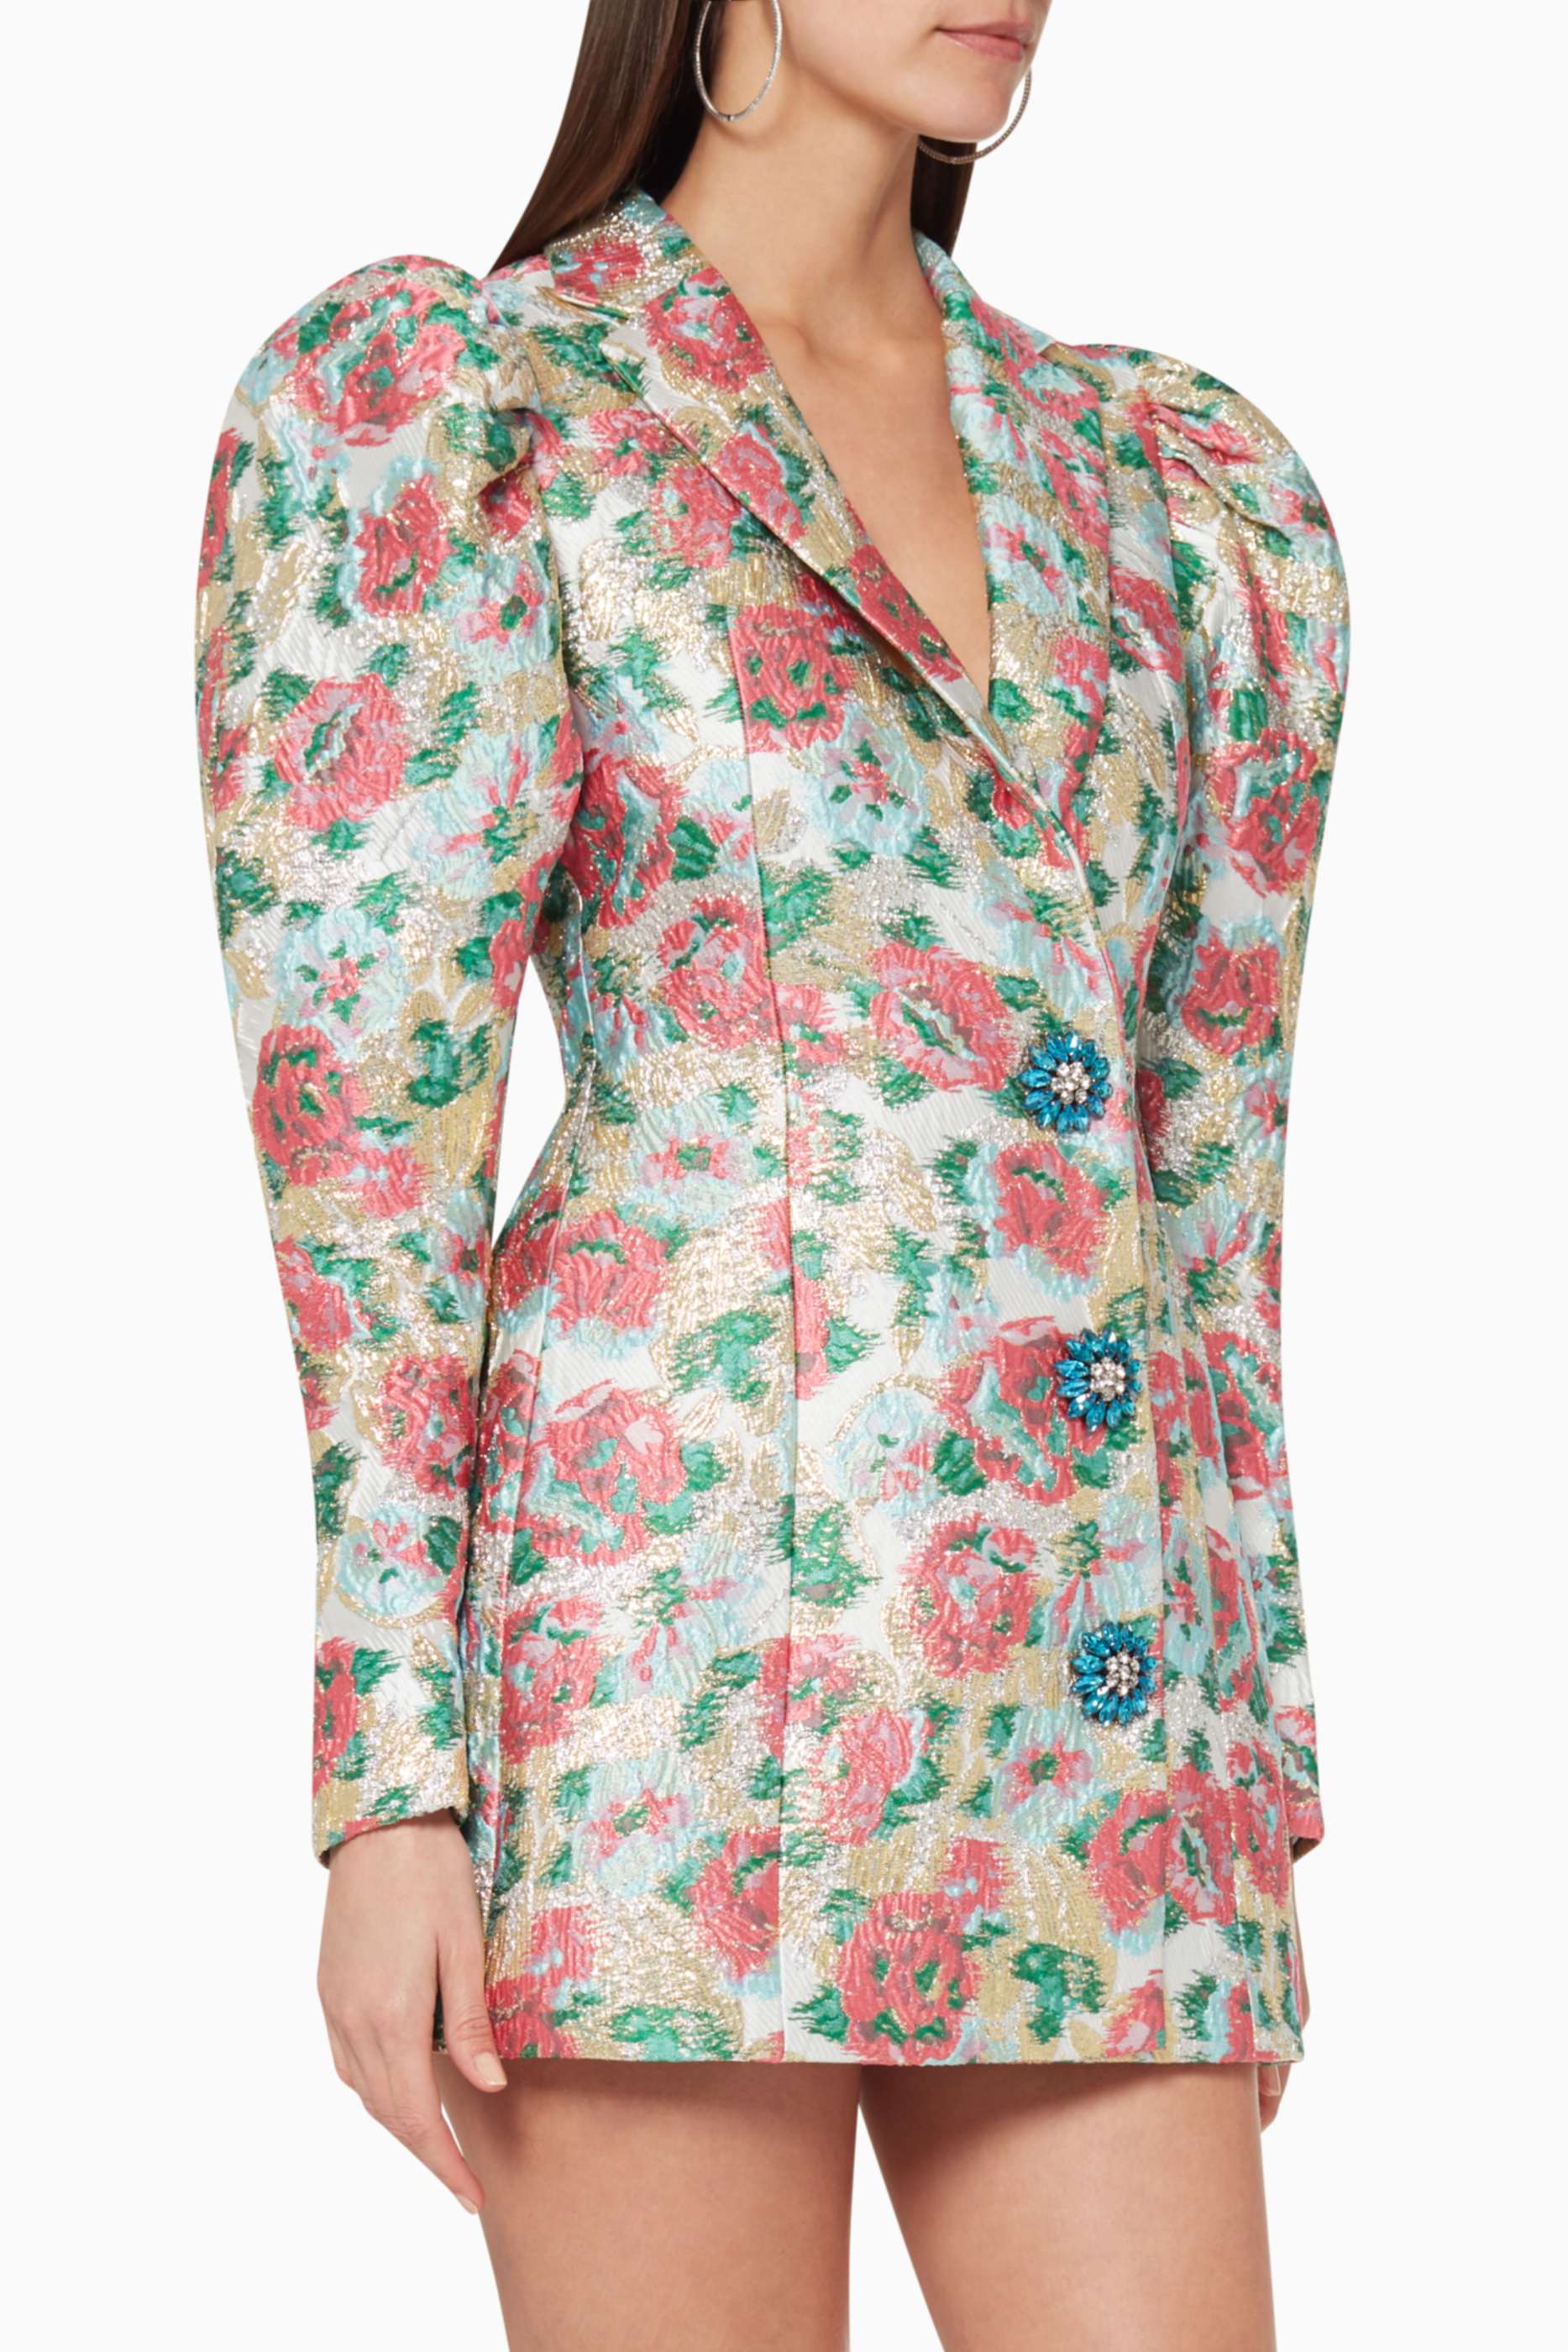 Shop Rotate Multicolour Carol Floral Jacquard Blazer Dress for 